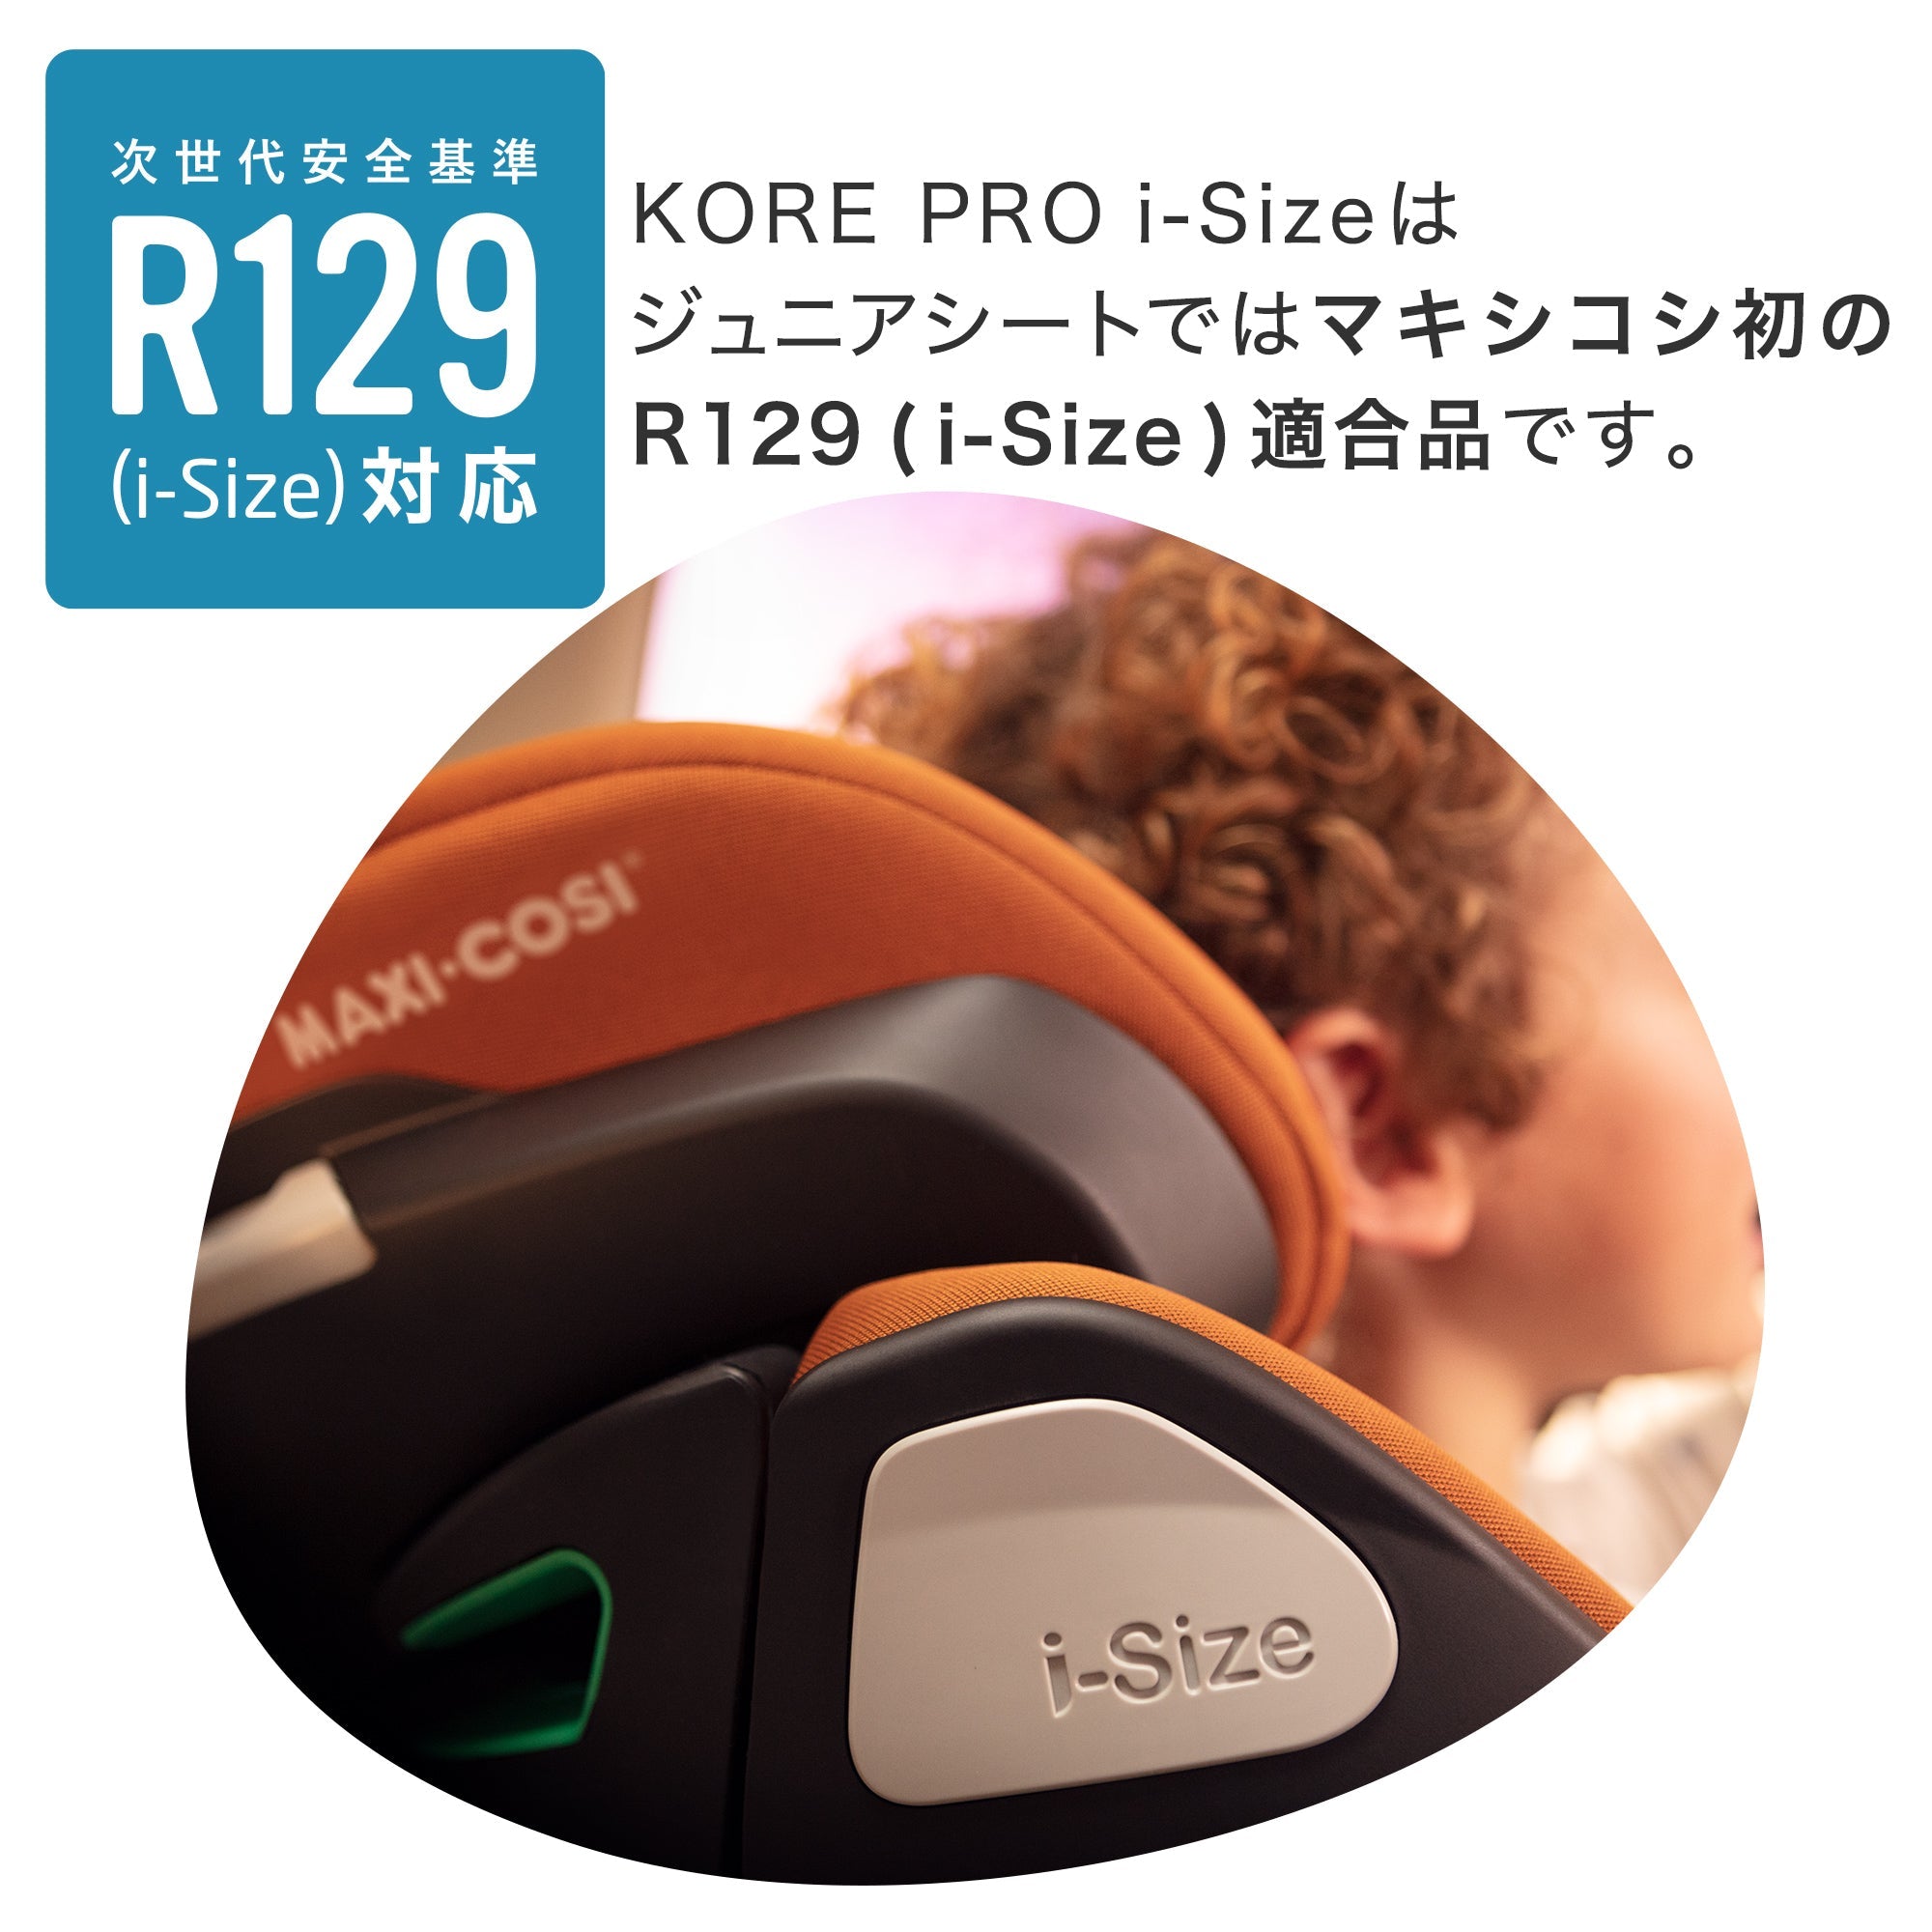 KORE PRO i -Sizeはジュニアシートではマキシコシ発のR129（i-Size）適合品です。